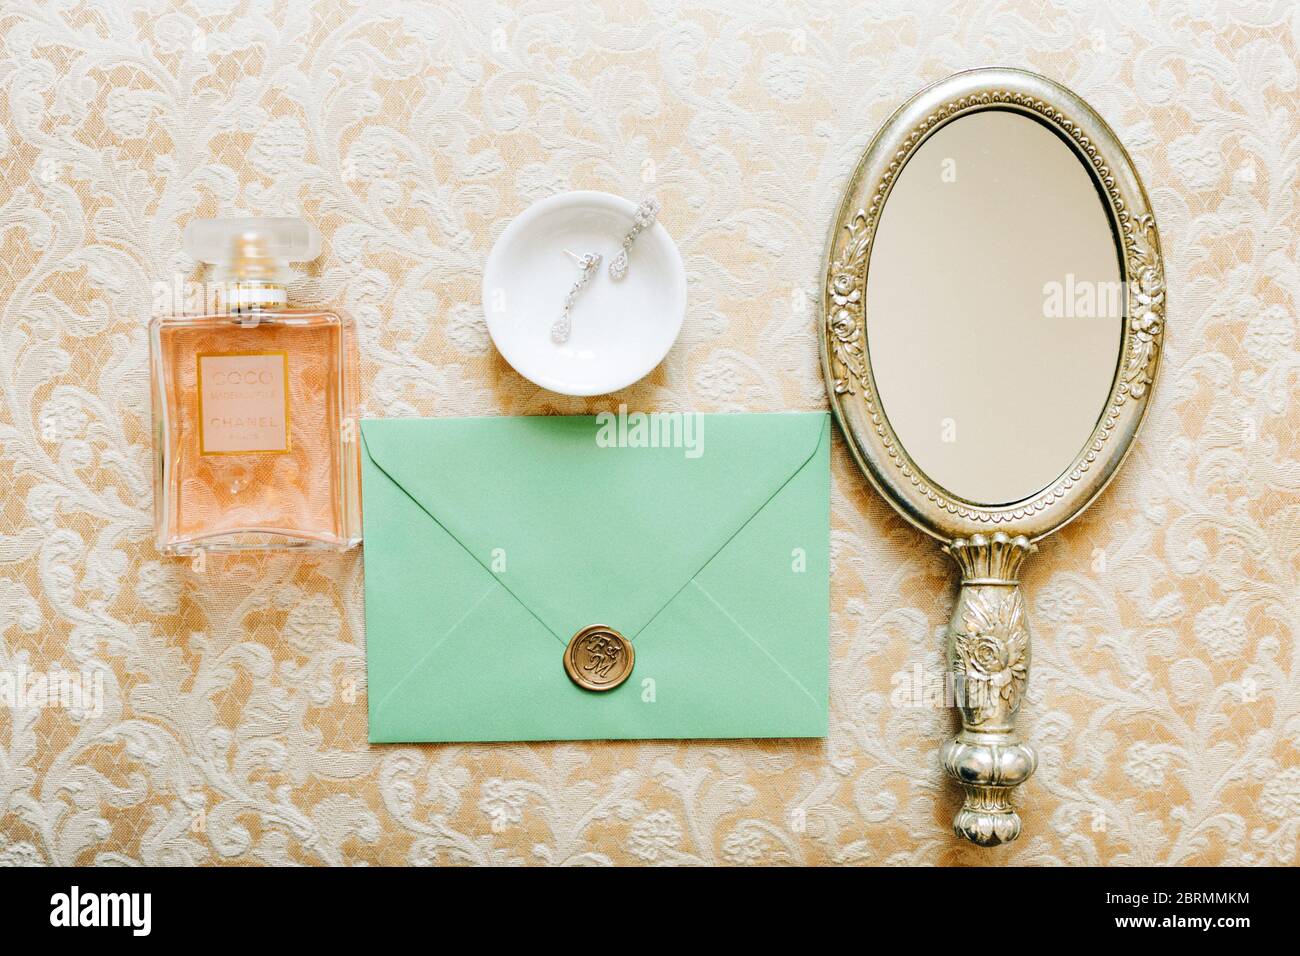 Bridal vintage mirror earings envelope chanel no 5 perfume Stock Photo